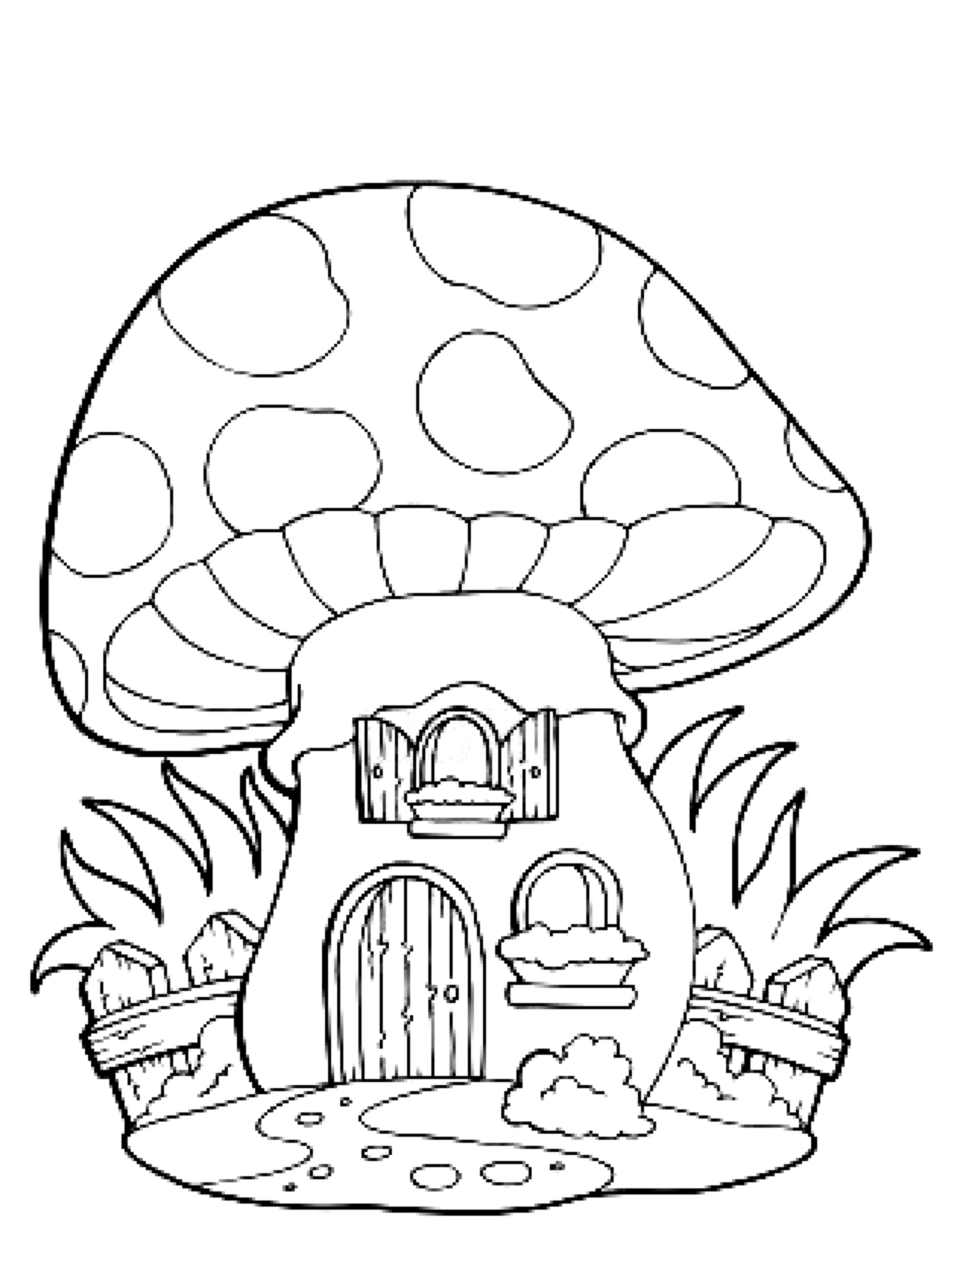 How to Draw a Mushroom | Envato Tuts+